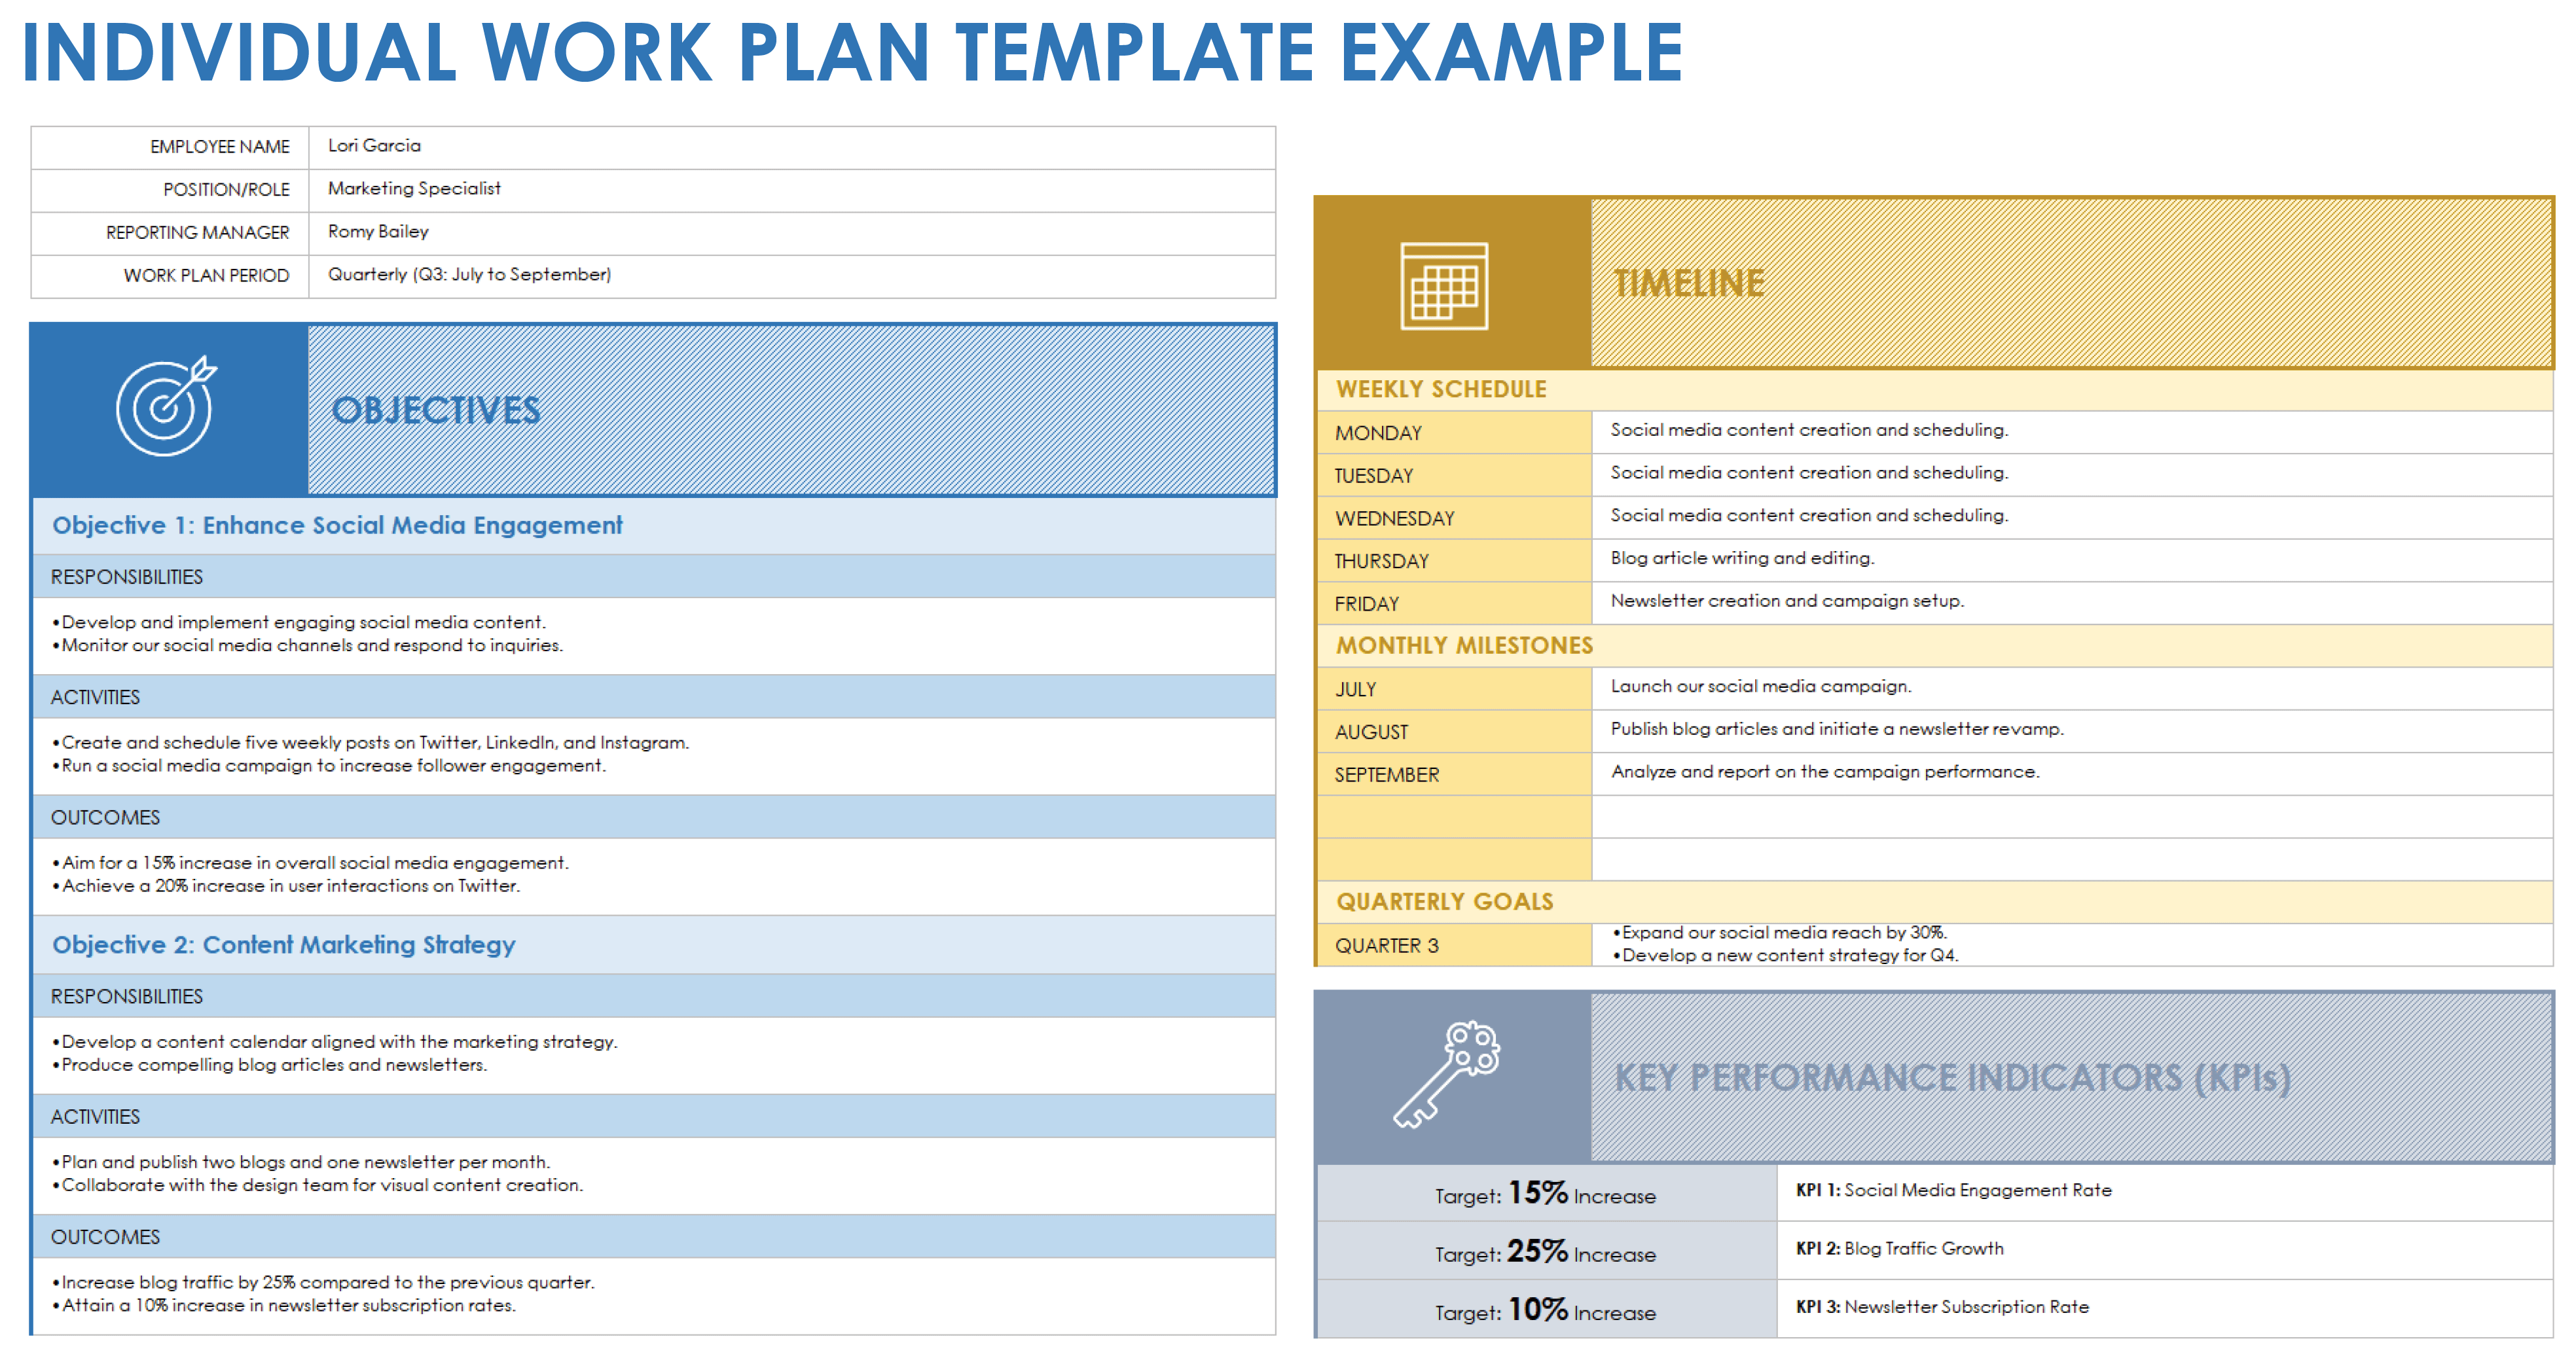 Individual Work Plan Example Template